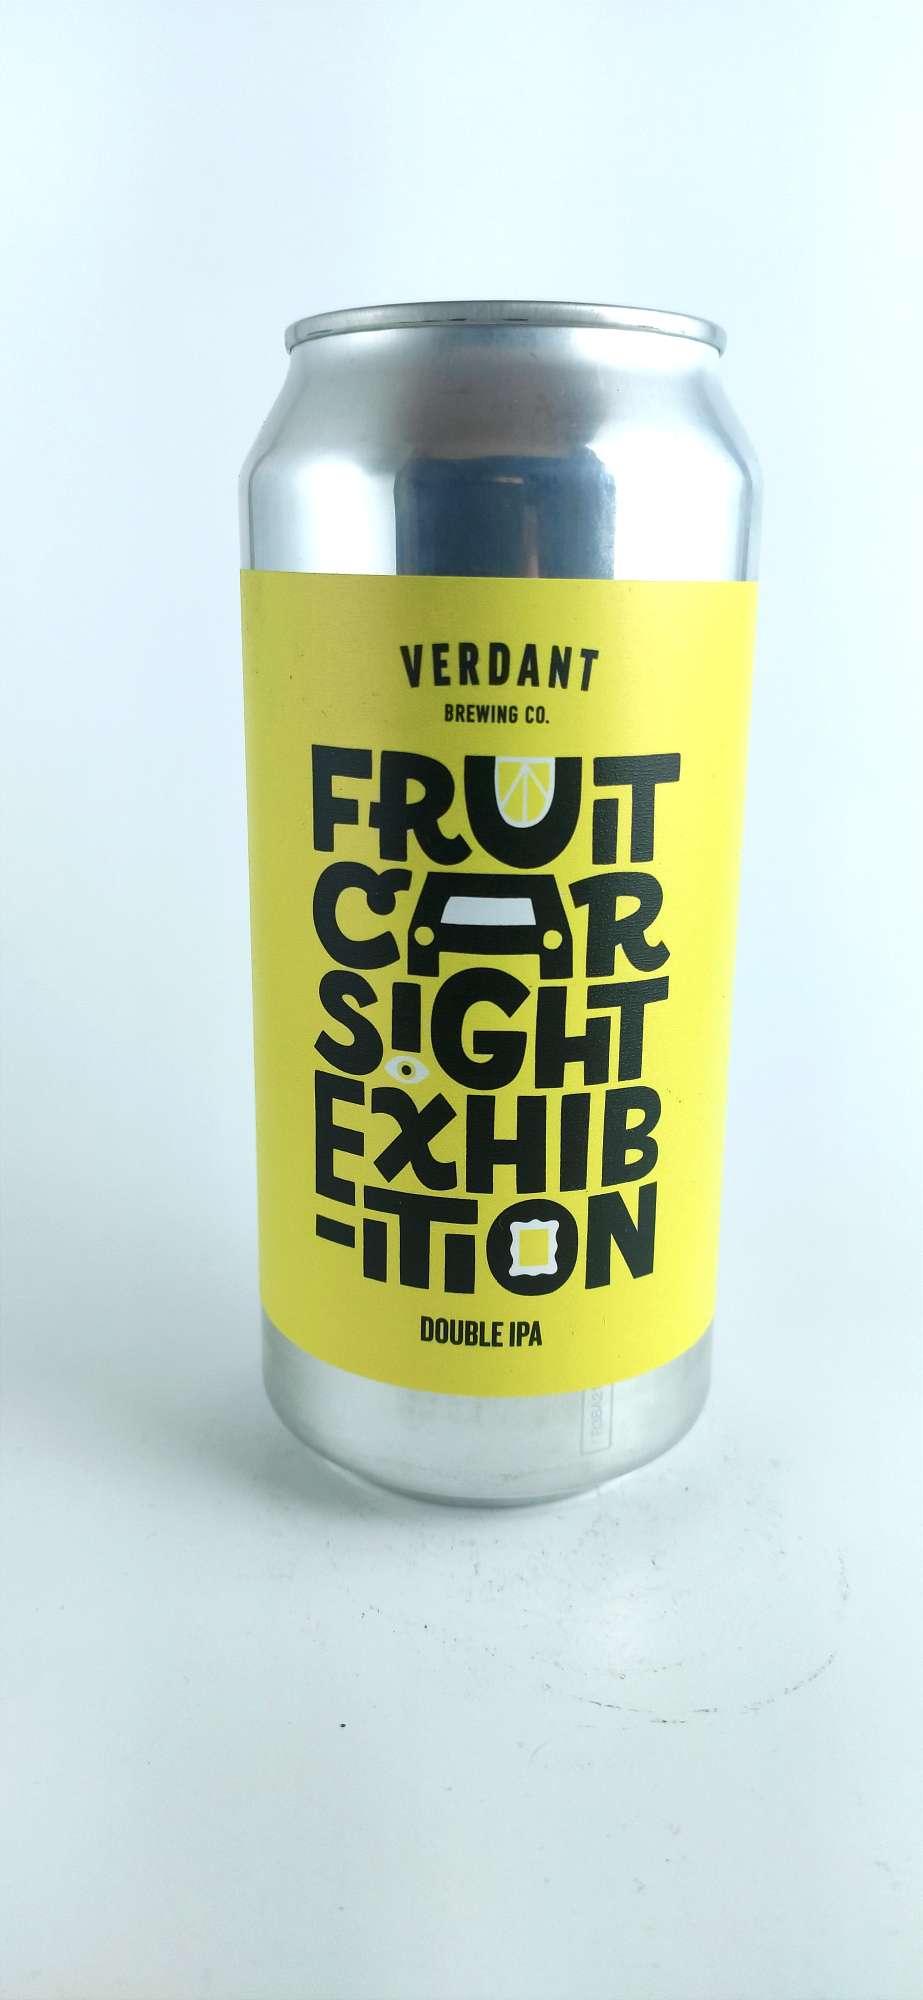 Verdant Fruit Car Sight Exhibition Double IPA 18°